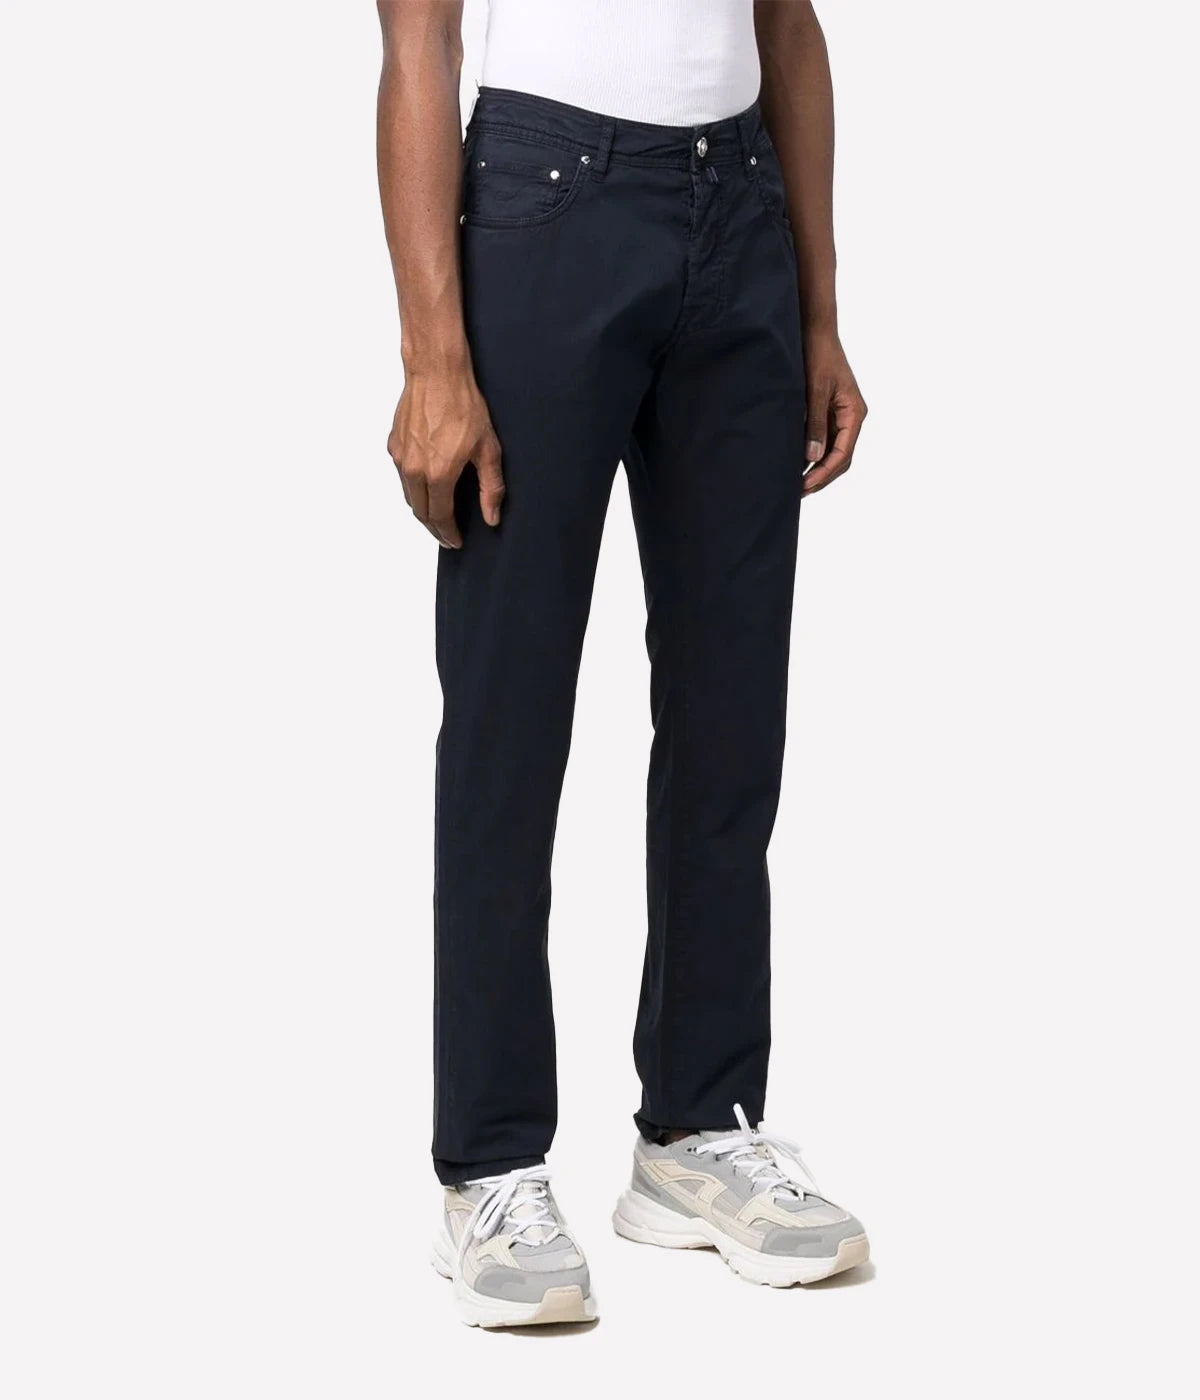 Bard 5 Pocket Slim Fit Jean in Navy Blue